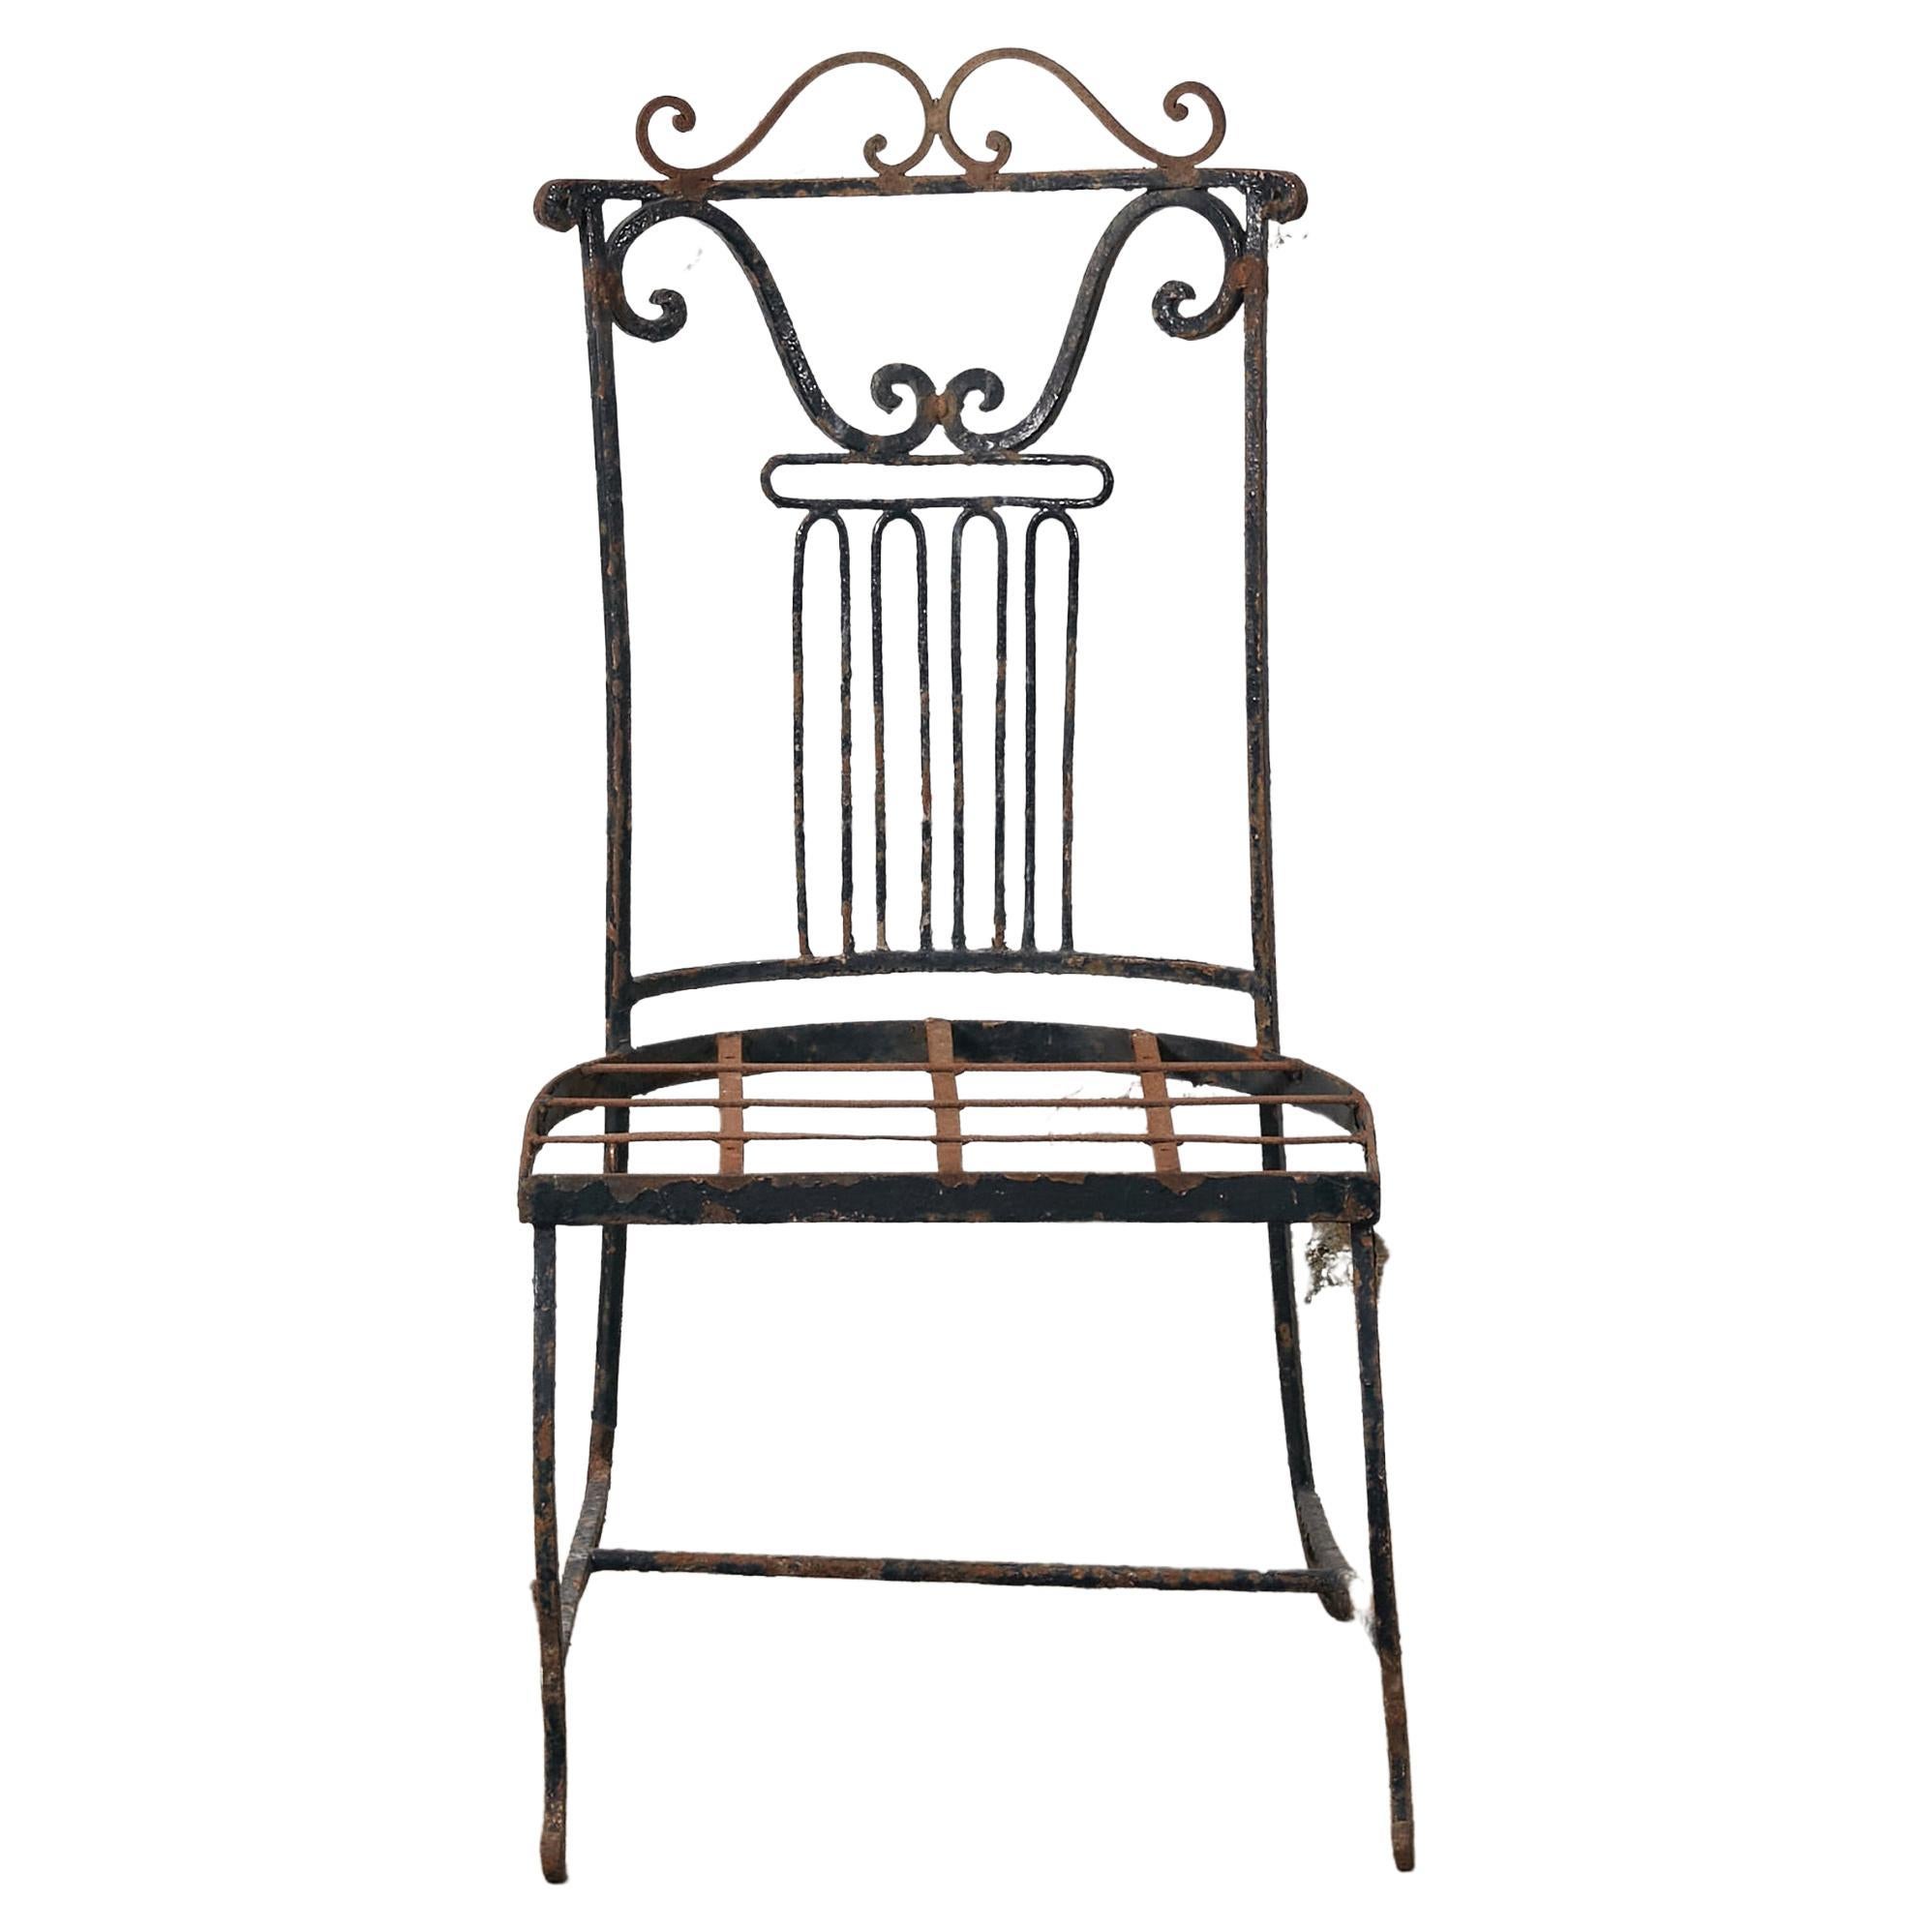 Rare Set of Four Garden/Patio Chairs with Original Patina